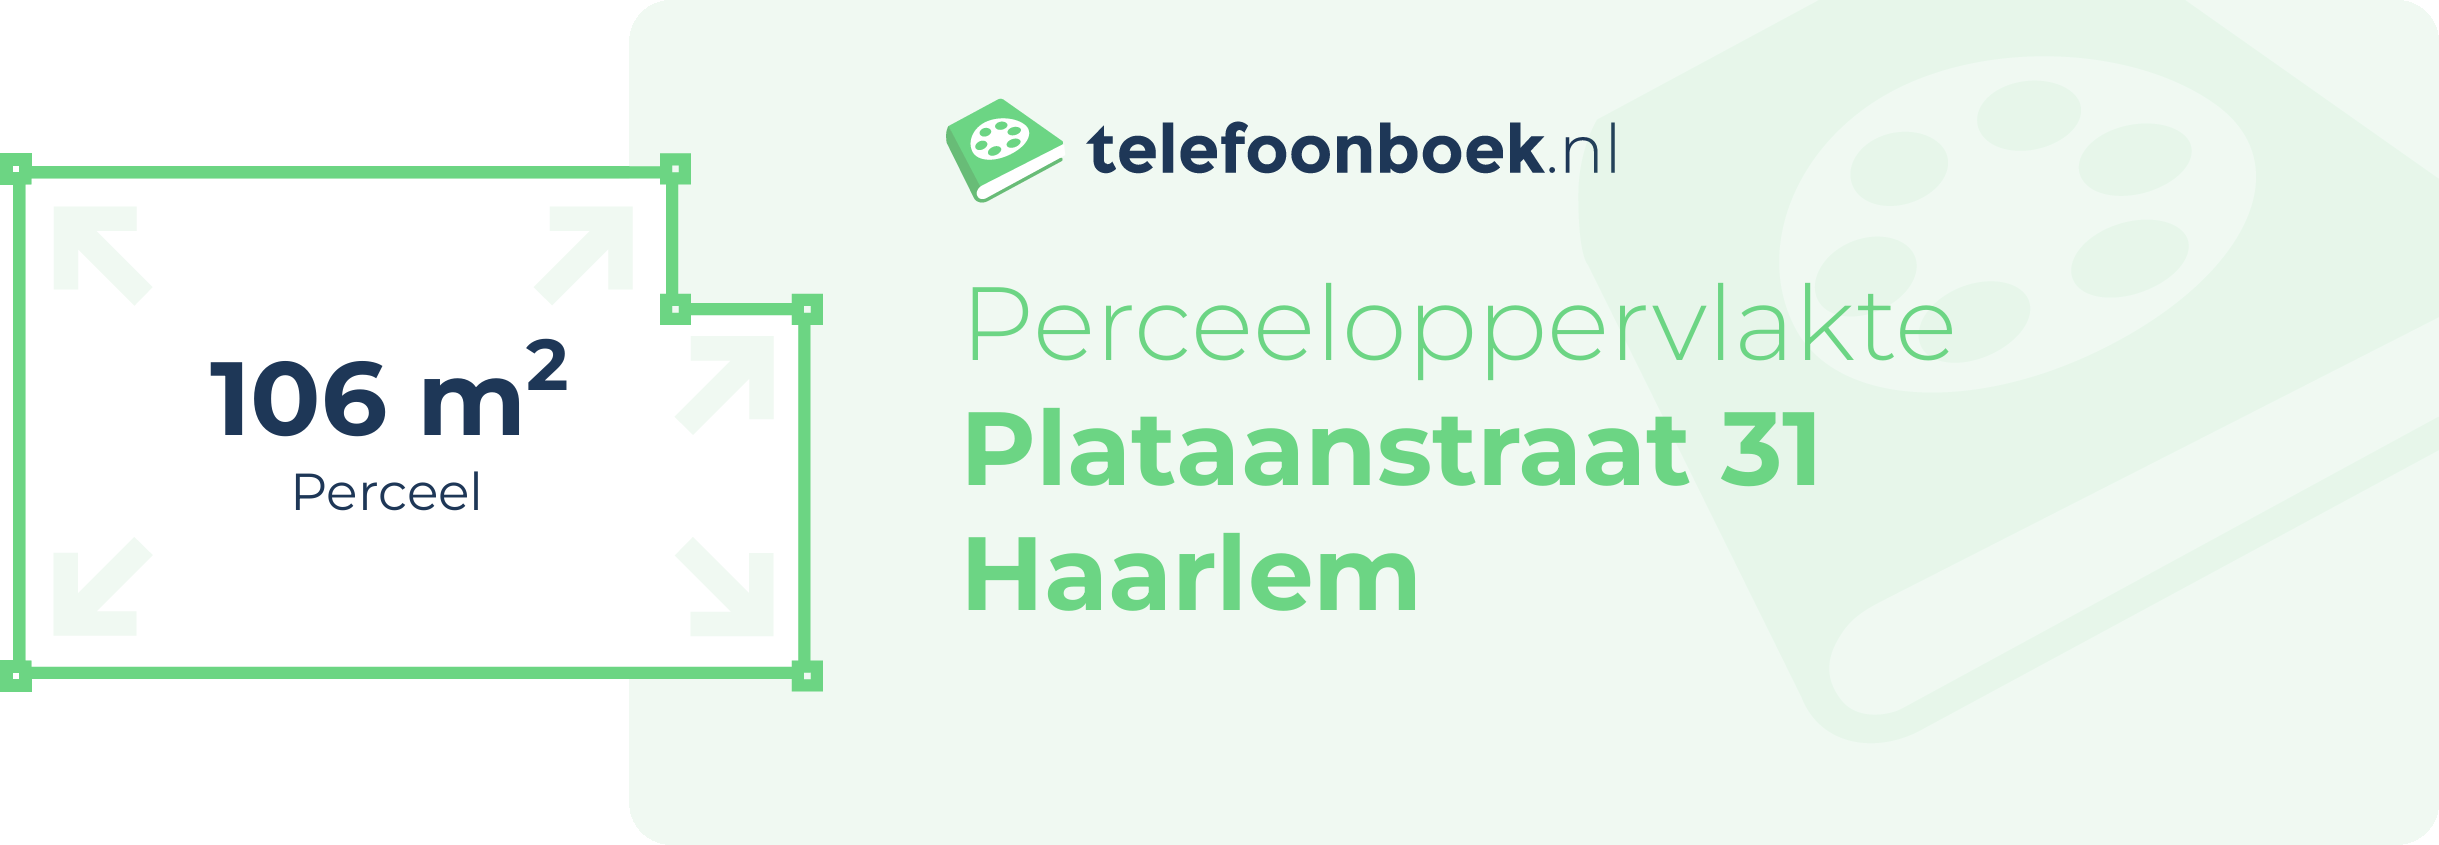 Perceeloppervlakte Plataanstraat 31 Haarlem